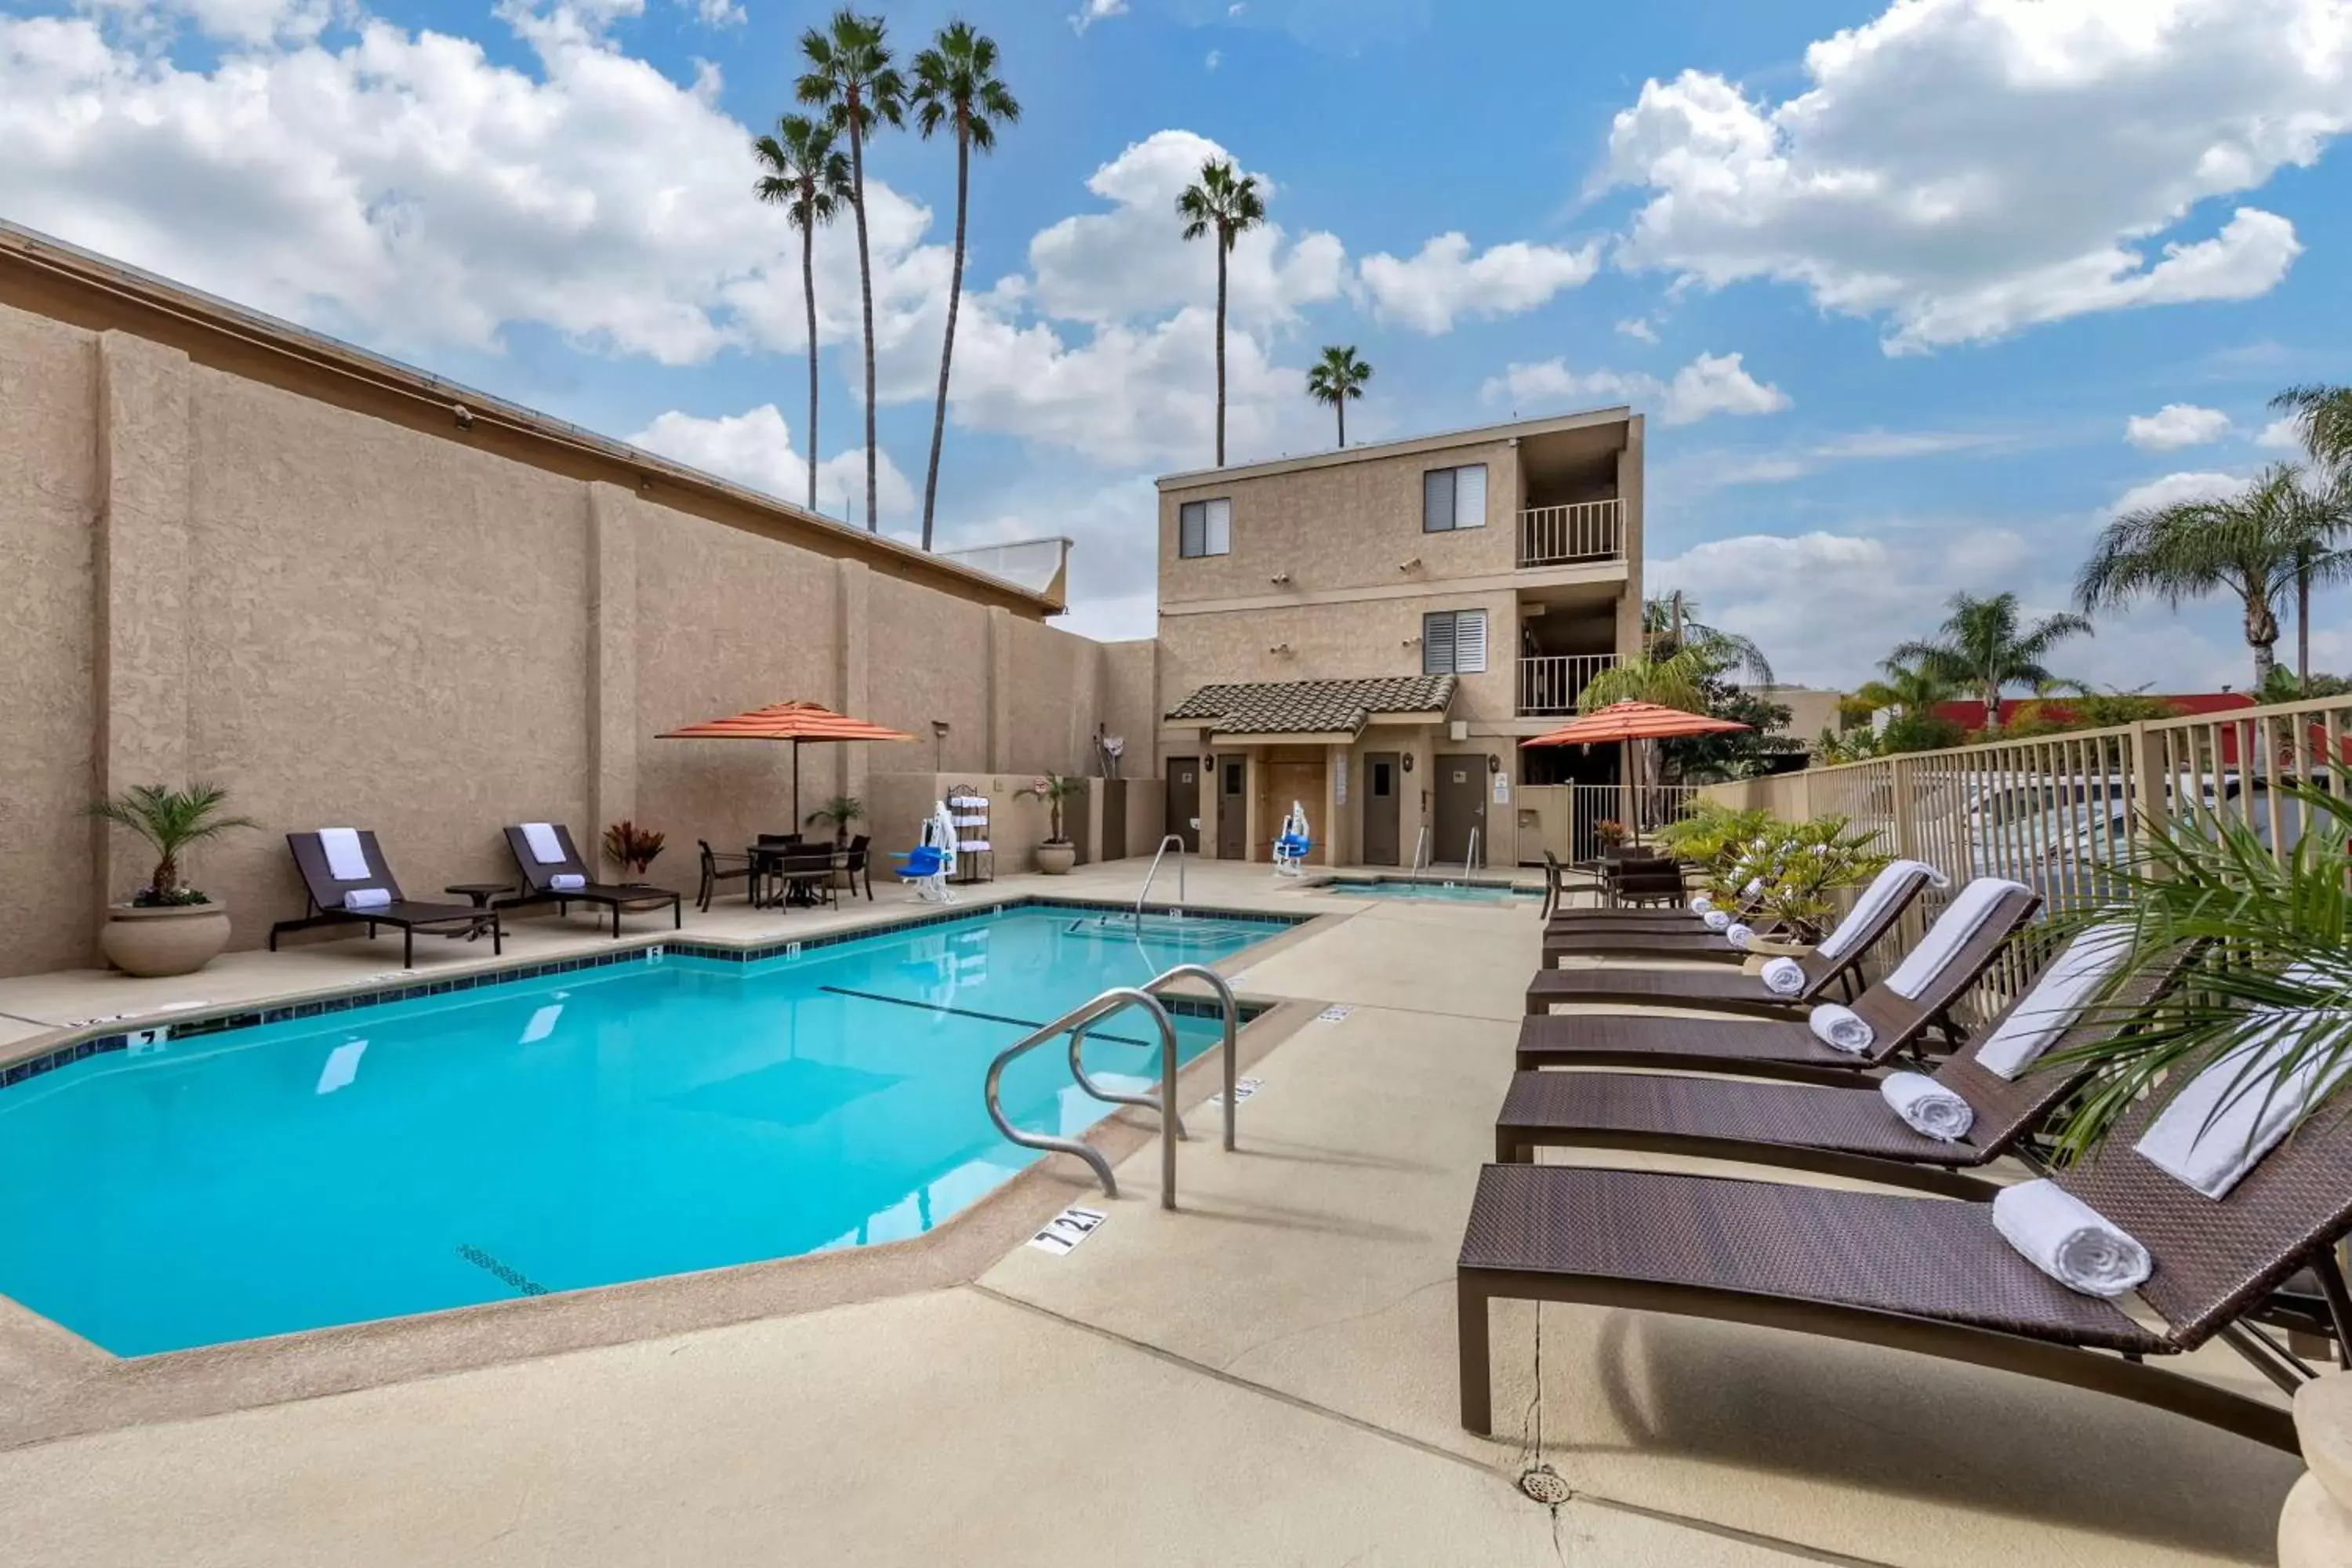 Activities, Swimming Pool in Best Western Plus Anaheim Inn